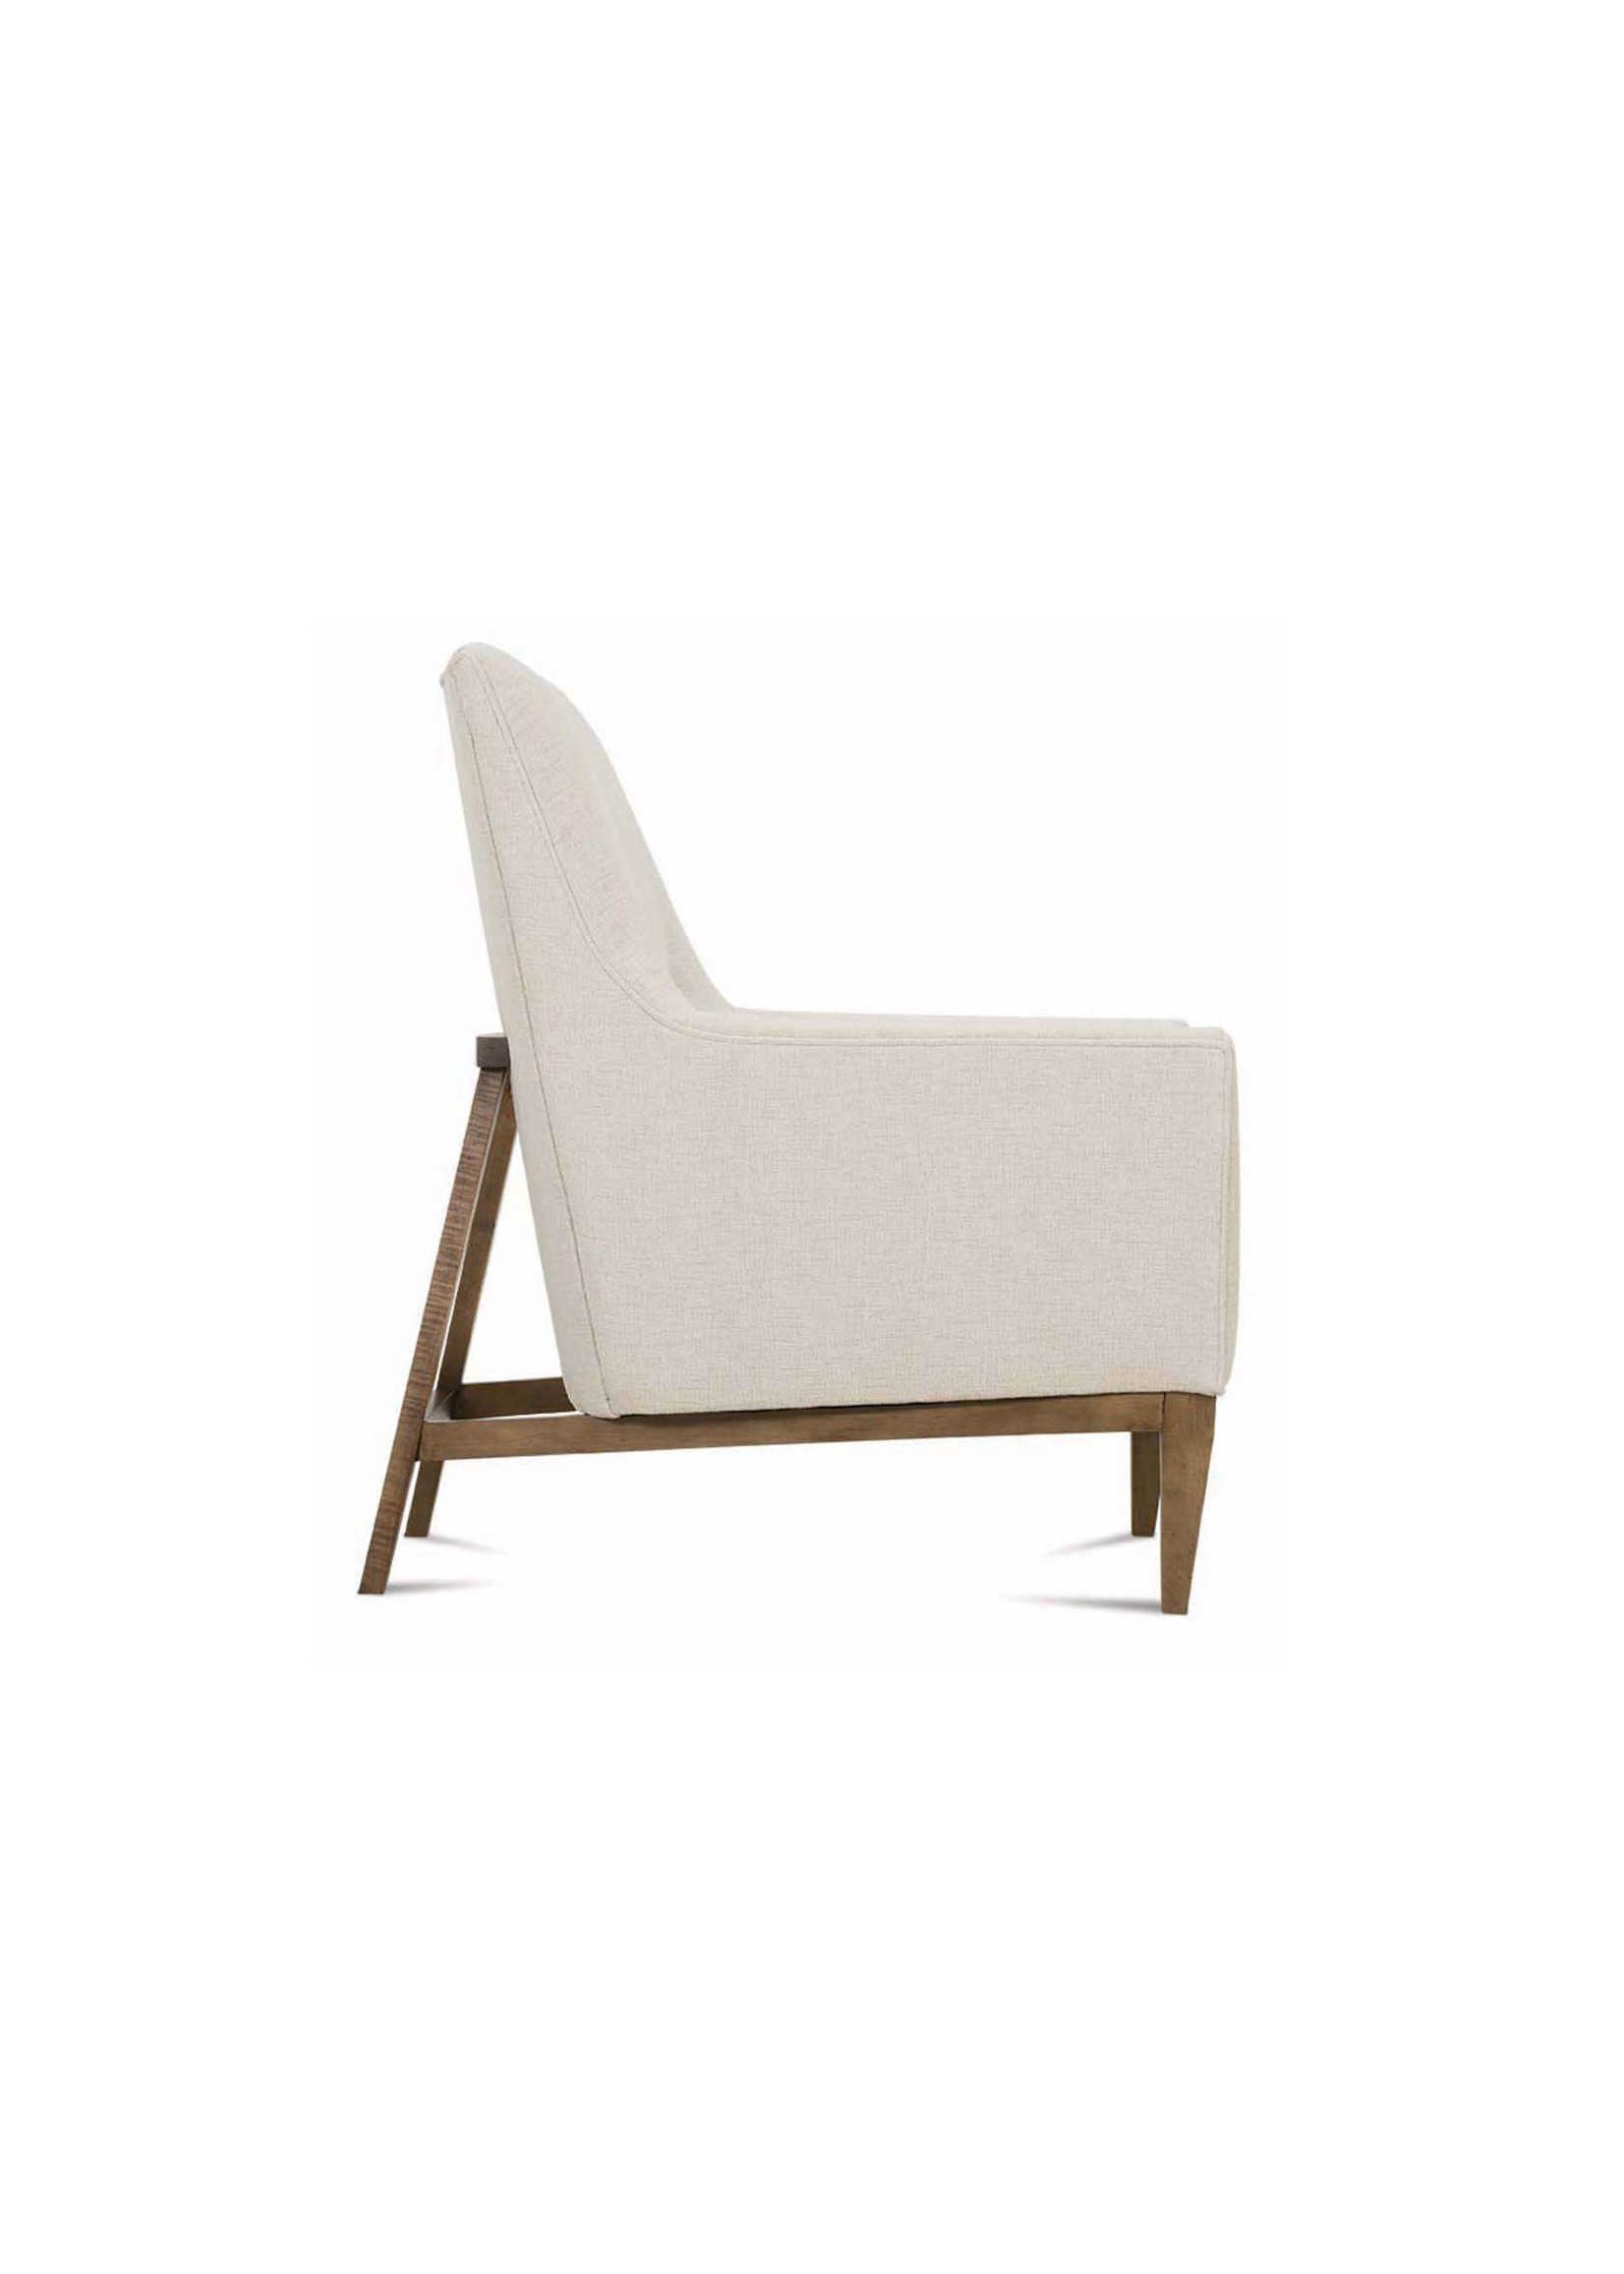 Rowe Furniture Thatcher Chair